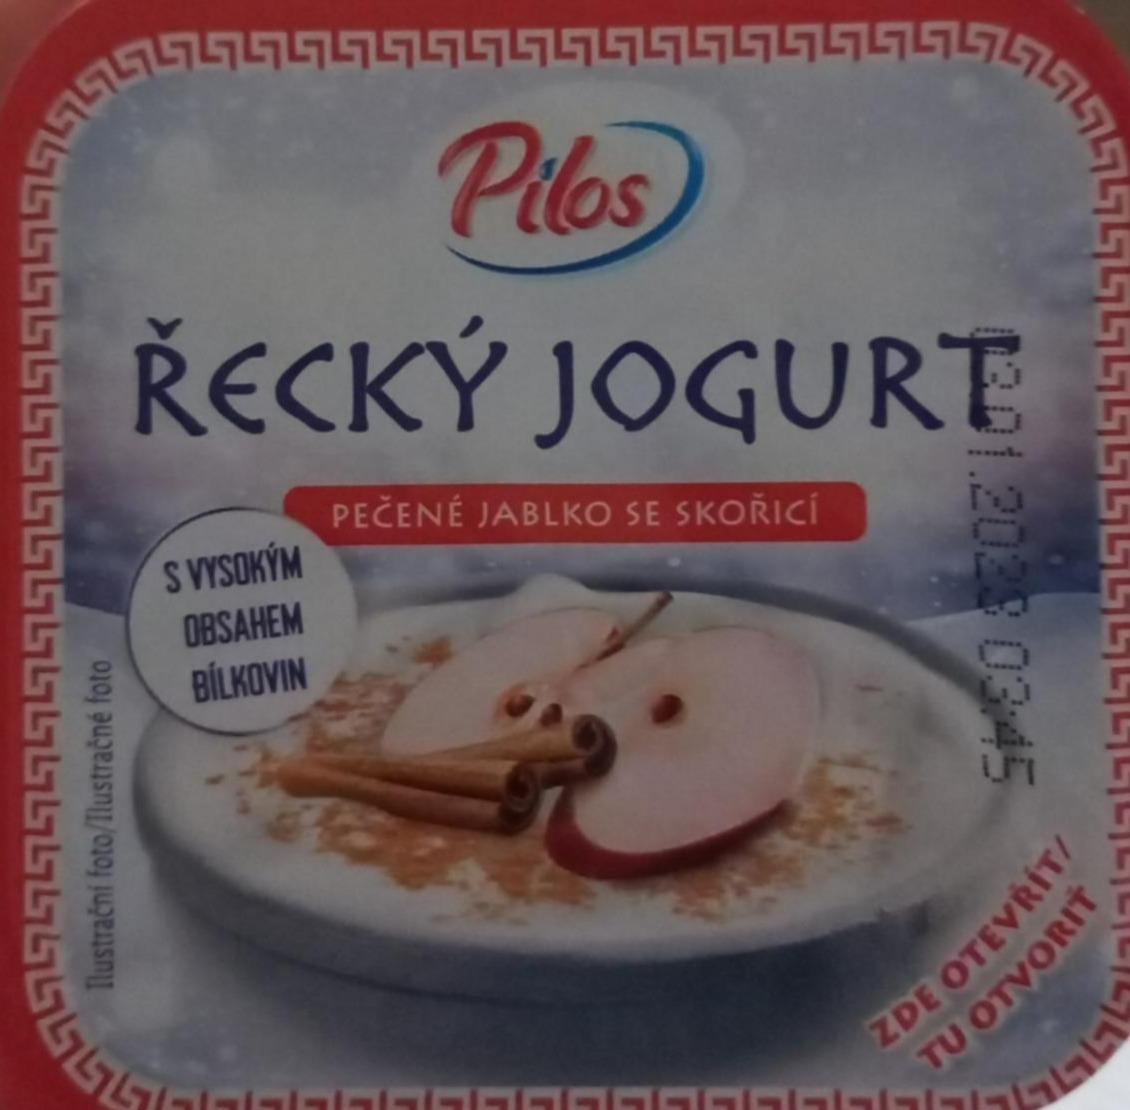 Fotografie - Řecký jogurt pečené jablko a skořice Pilos